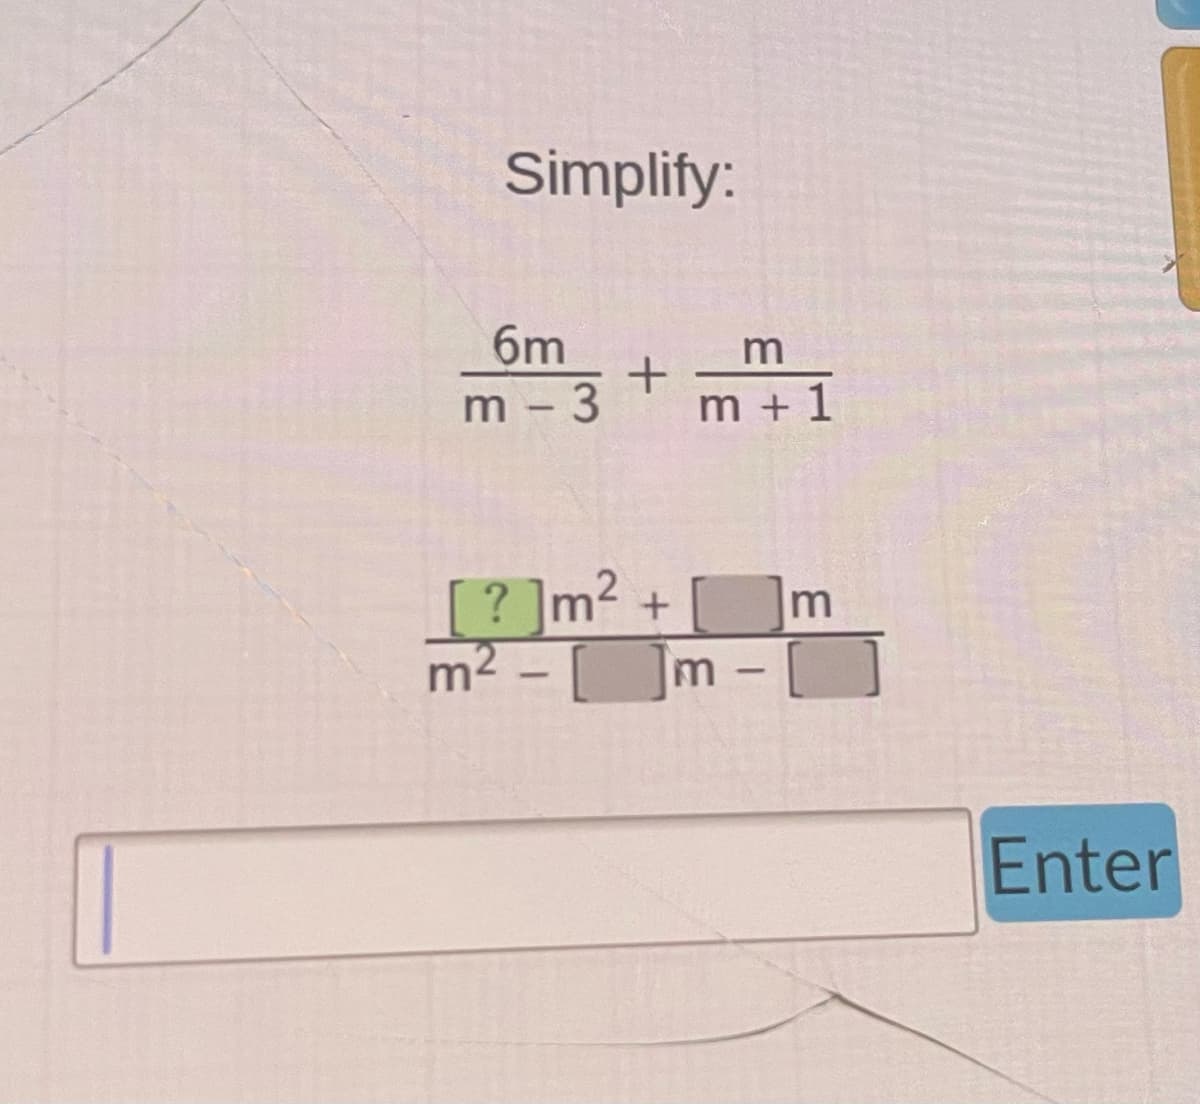 Simplify:
+
6m
m-3
? ]m²
m² - [
+
m
m + 1
m
m
-
Enter